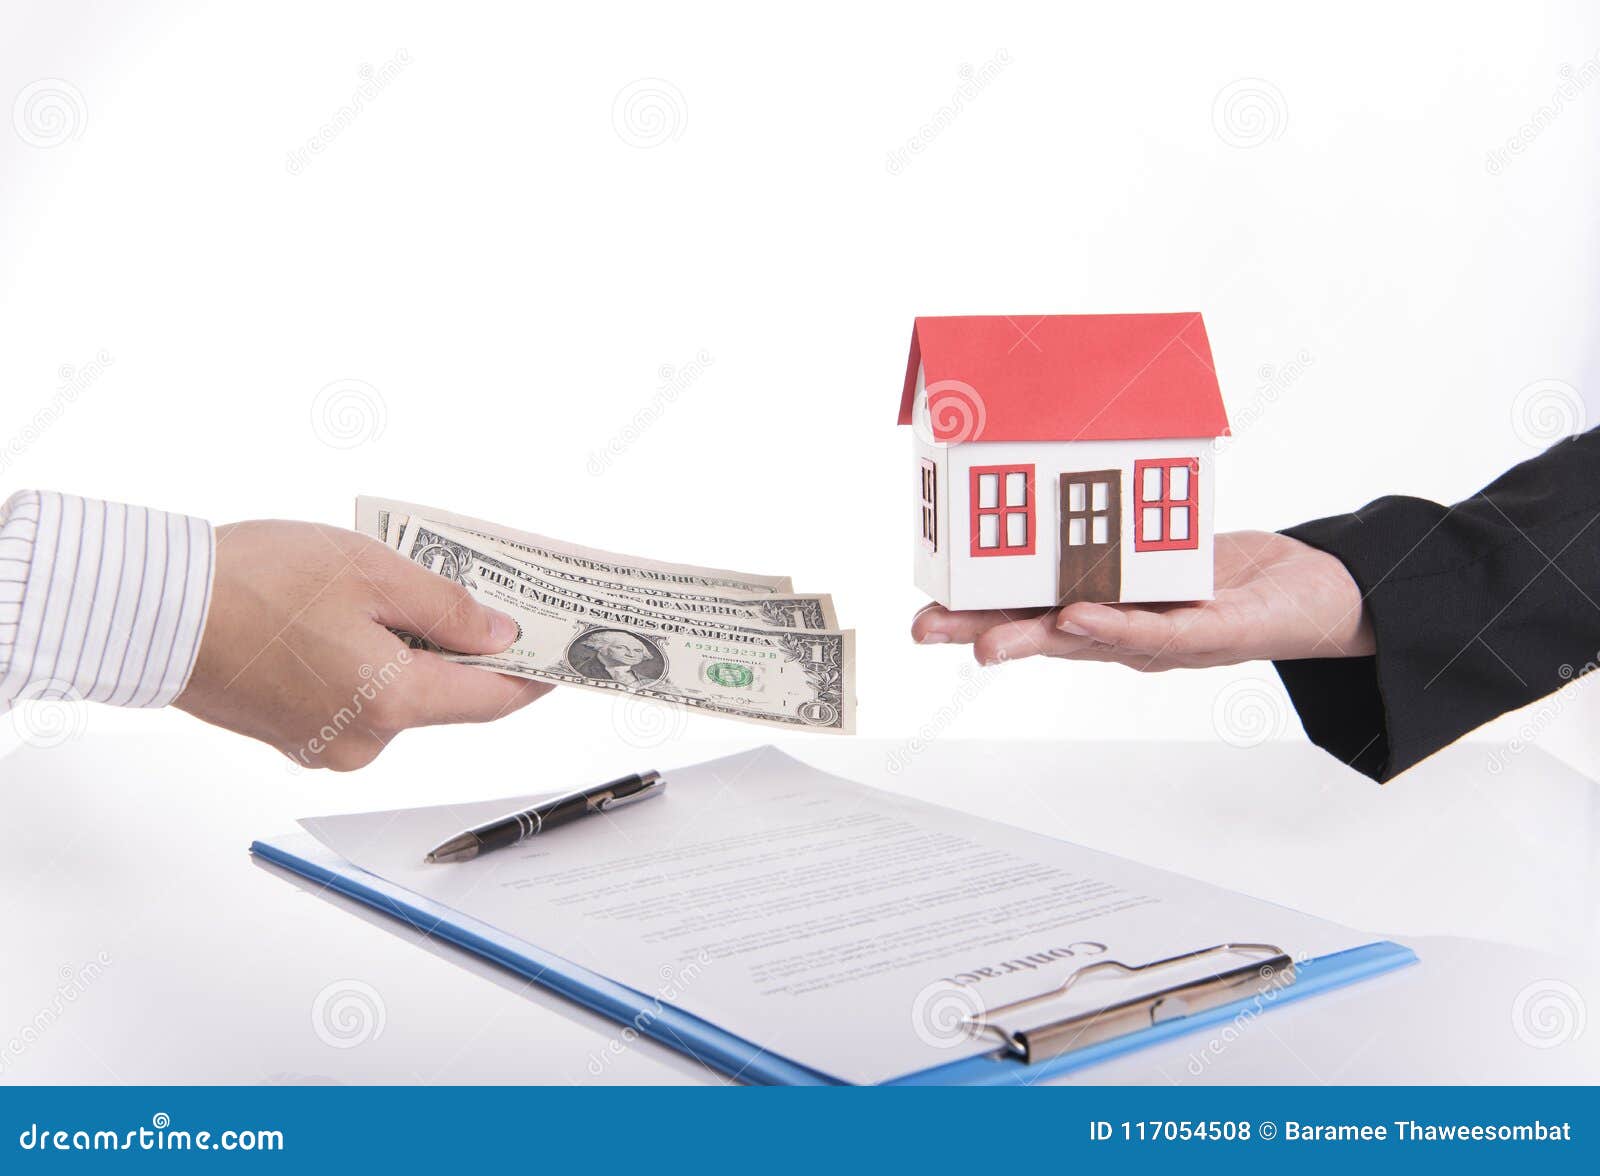 salesman agent exchange house money customer agreement contract sale home 117054508